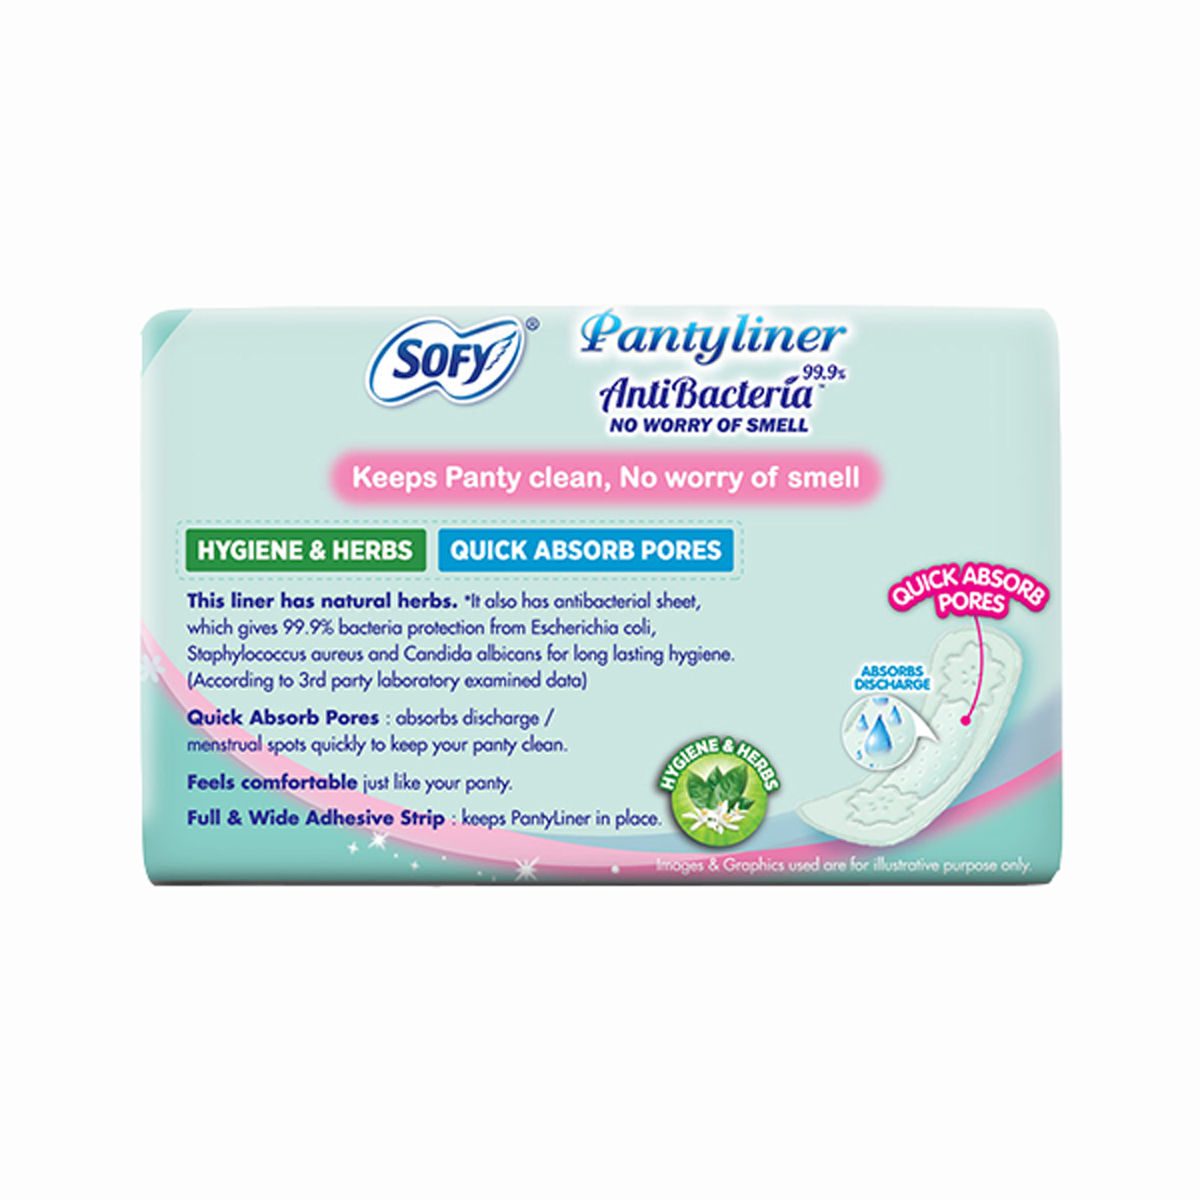 Sofy Antibacteria Pantyliner, 18 Count, Pack of 1 